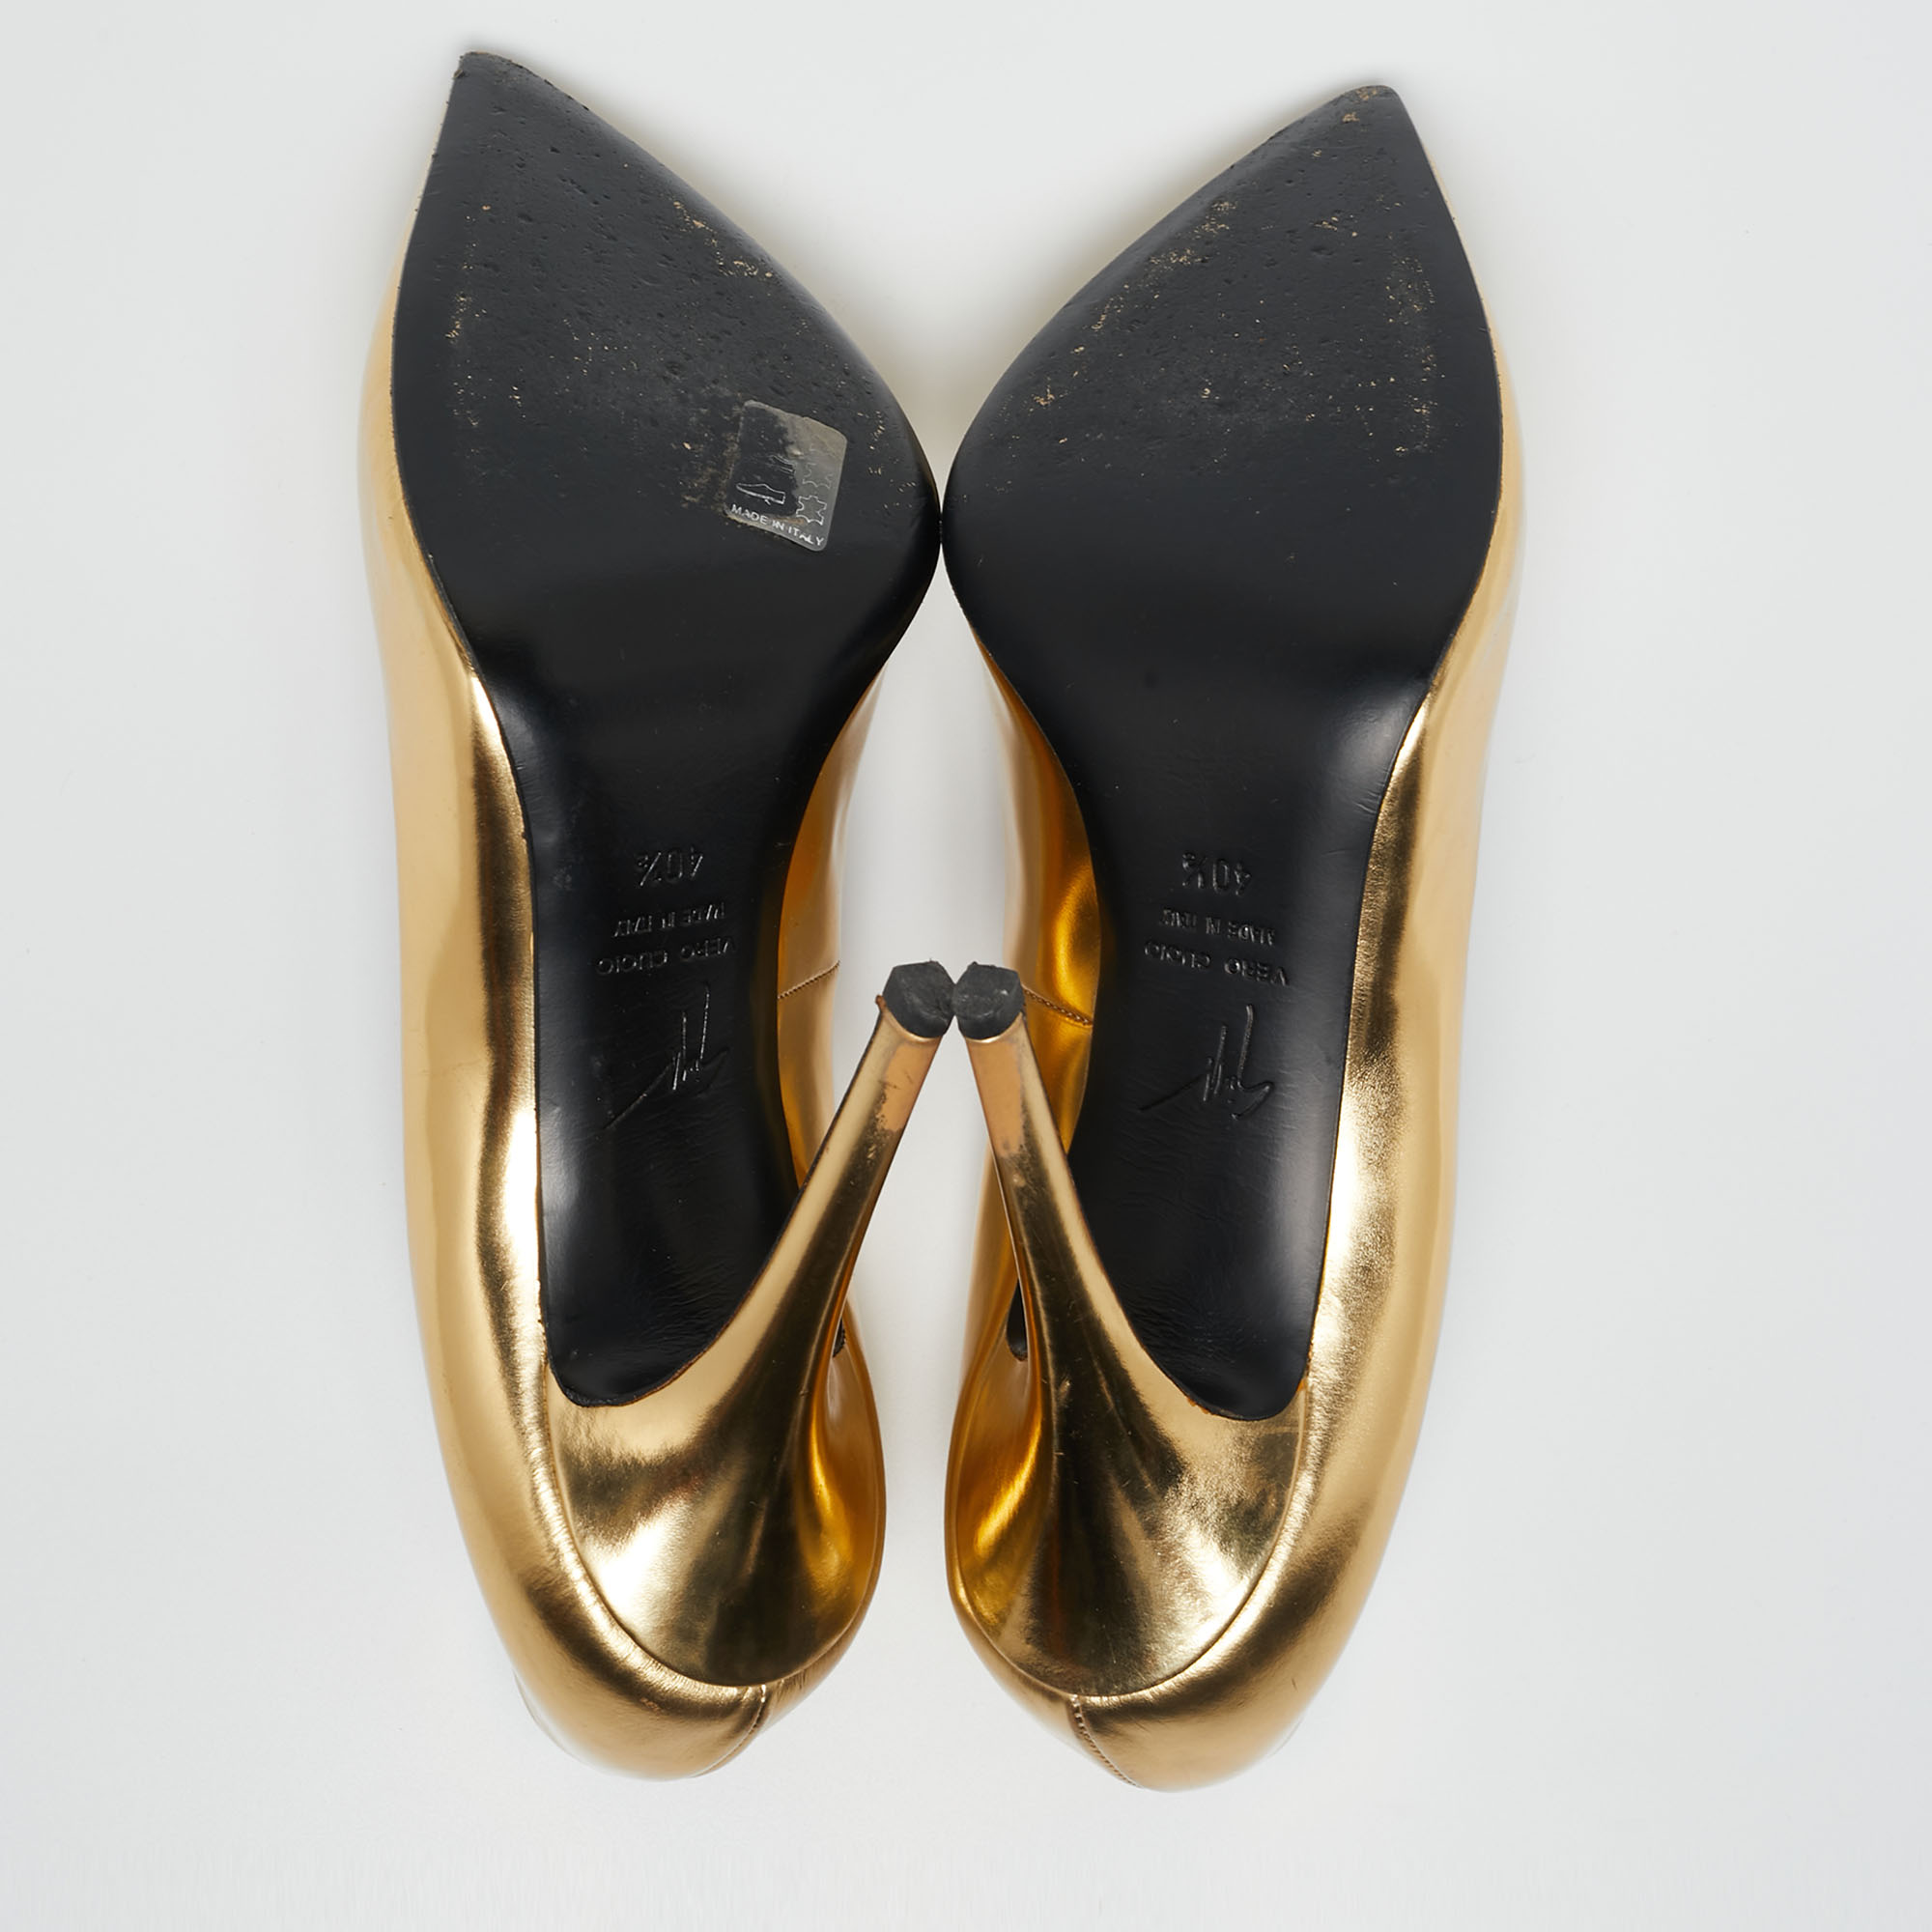 Giuseppe Zanotti Gold Leather Pointed Toe Pumps Size 40.5